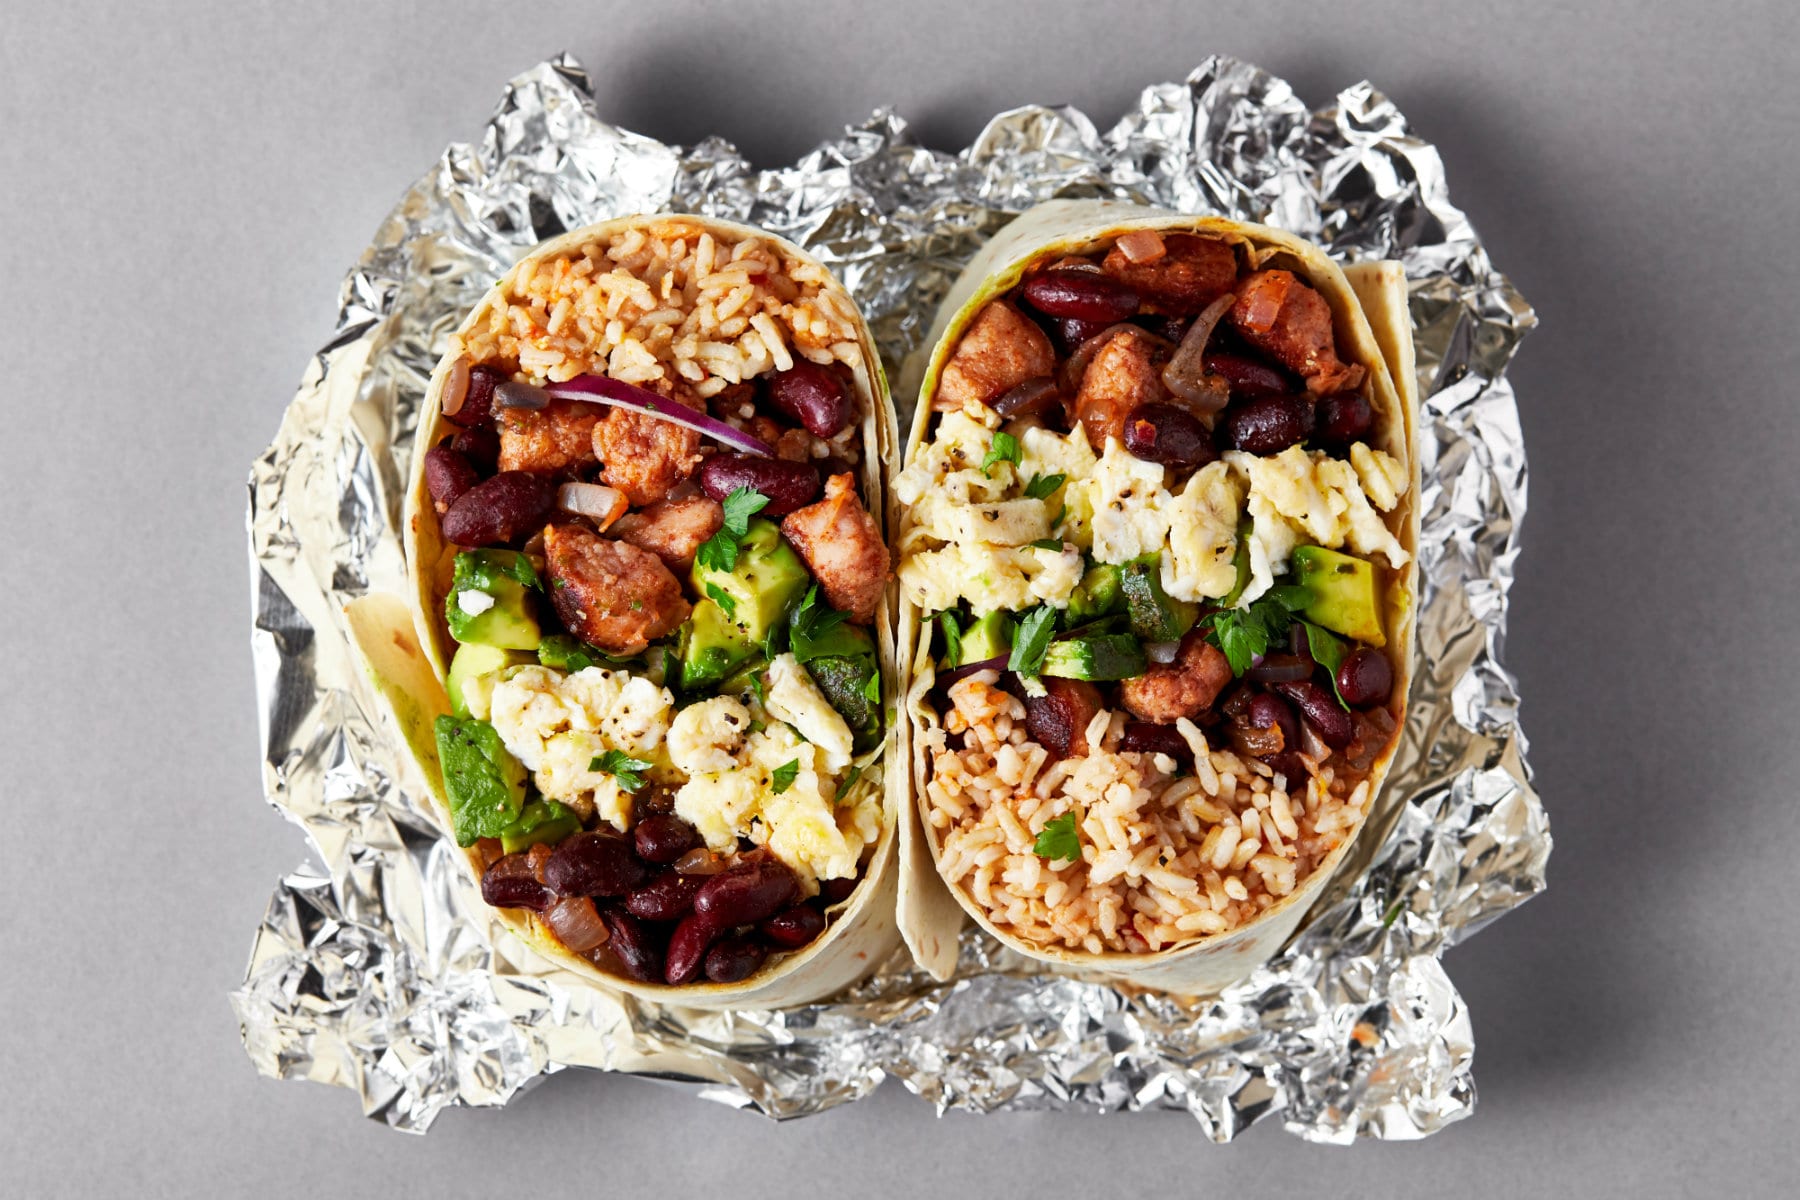 Burrito delicioso: alternativa para obter energia e nutrientes